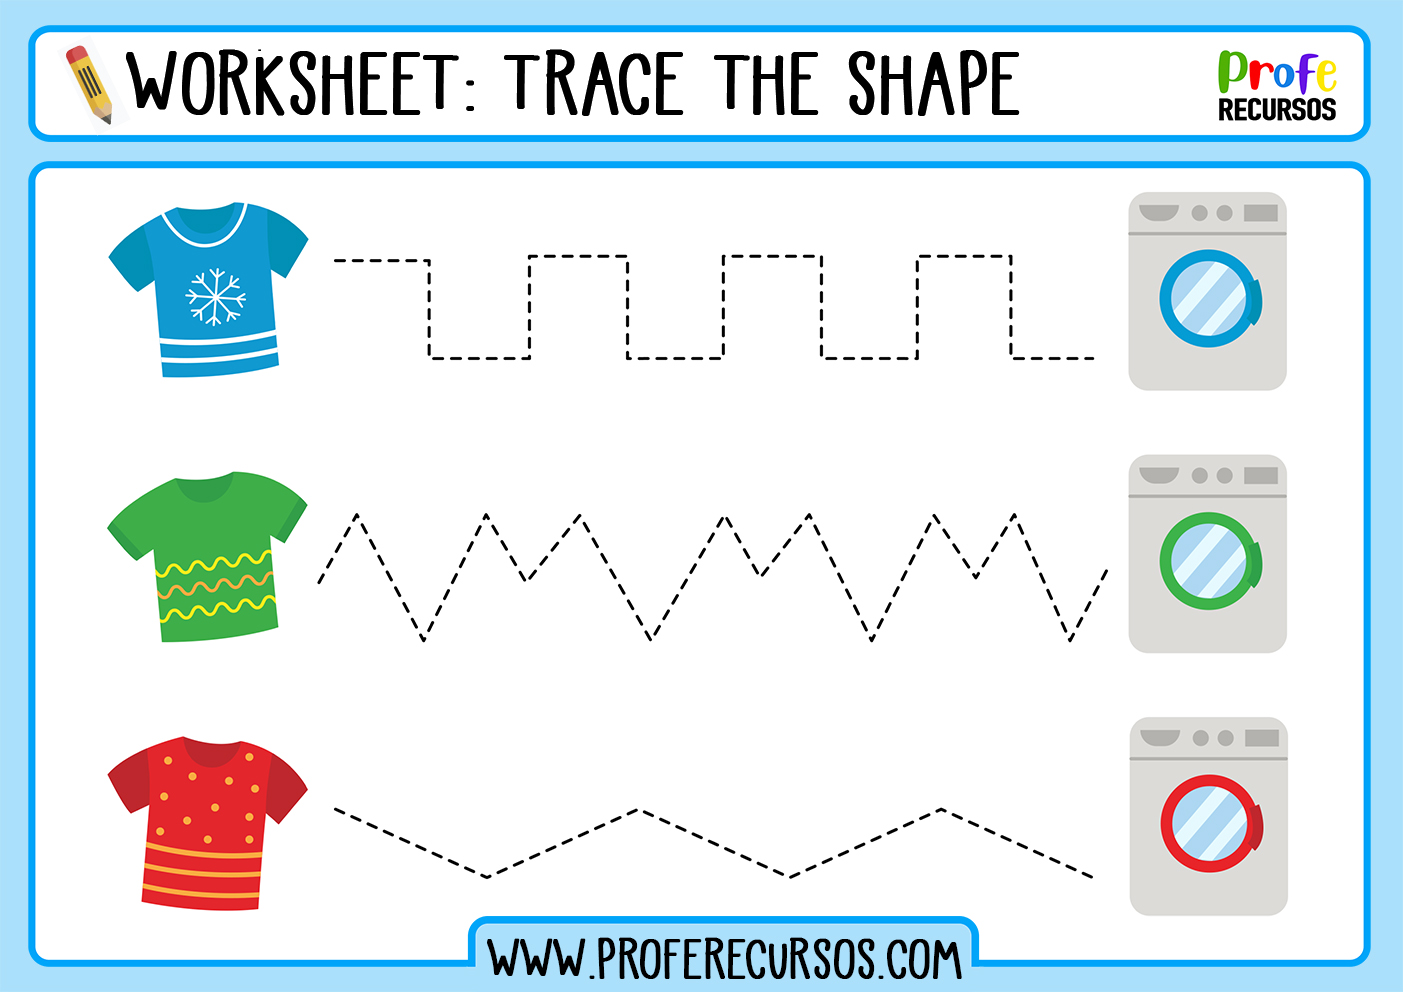 Tracing exercises for preschoolers